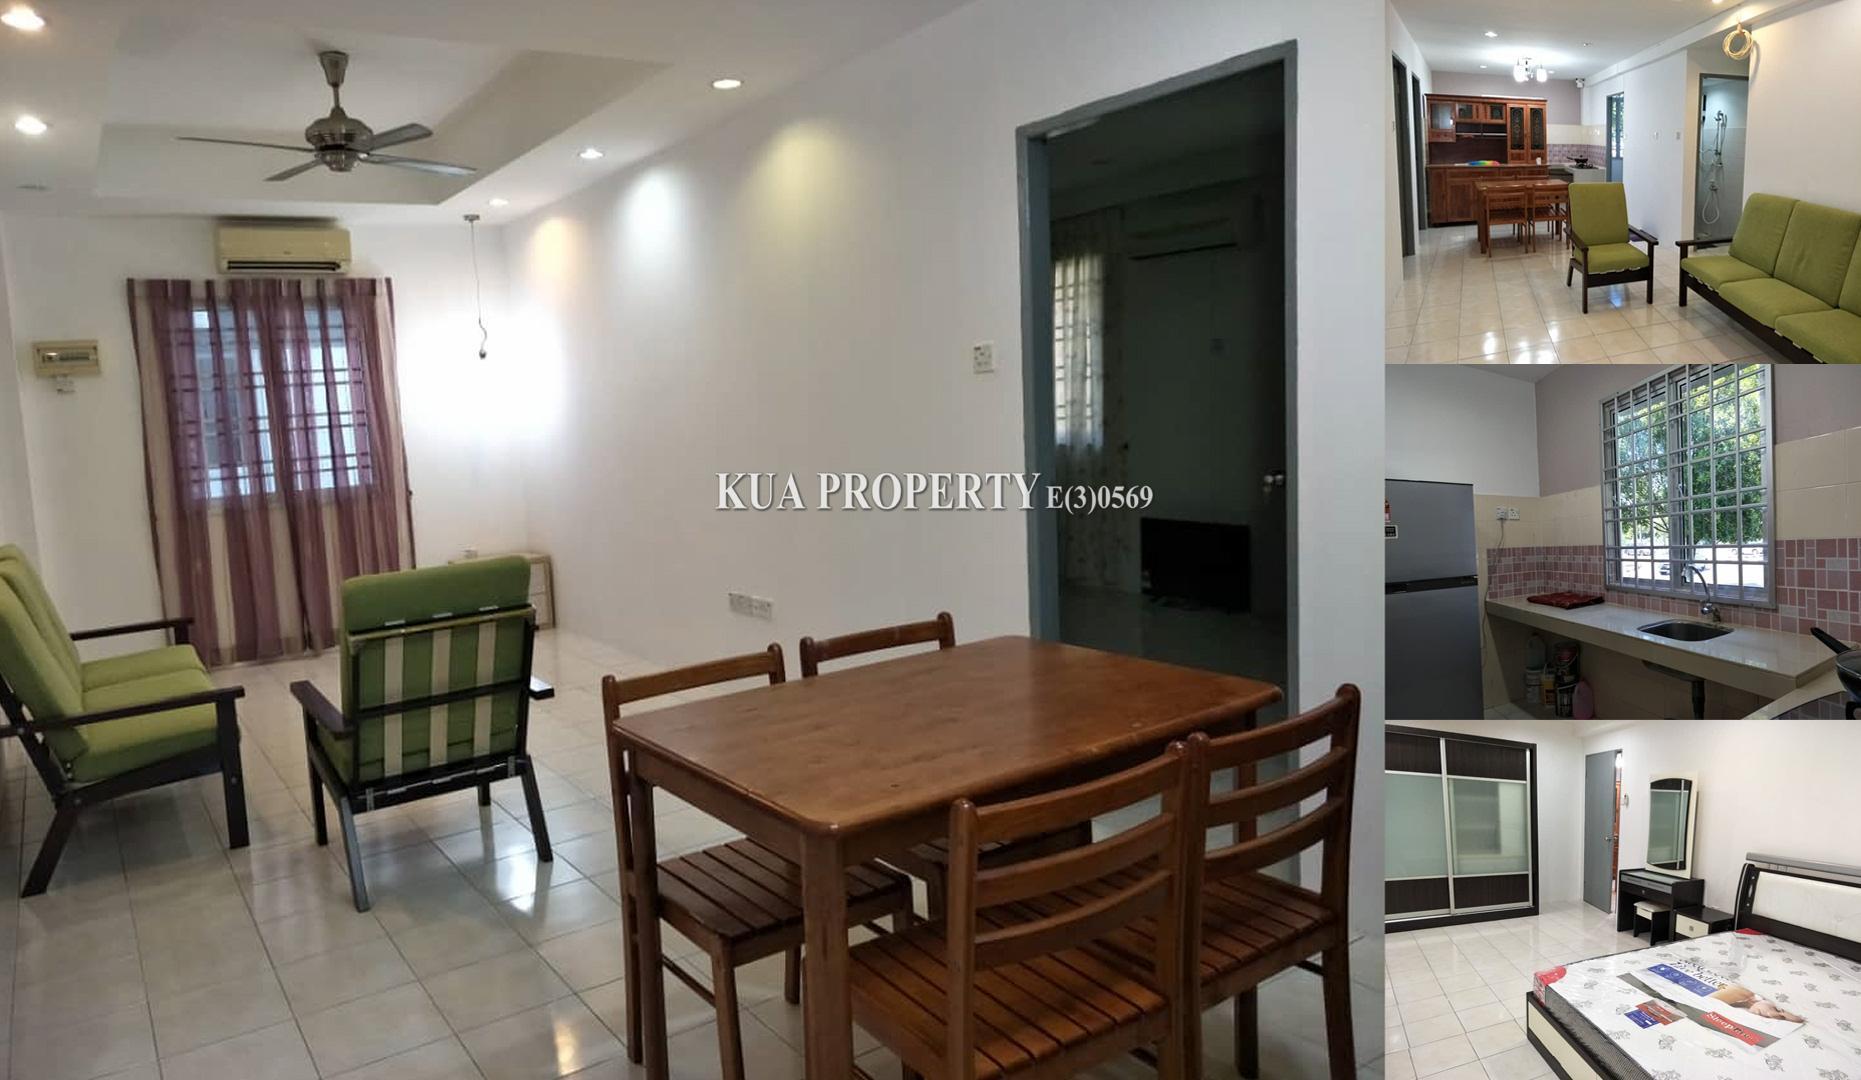 Ground Floor Samajaya Apartment For Rent! at Jalan Usahajaya, Muara Tabuan